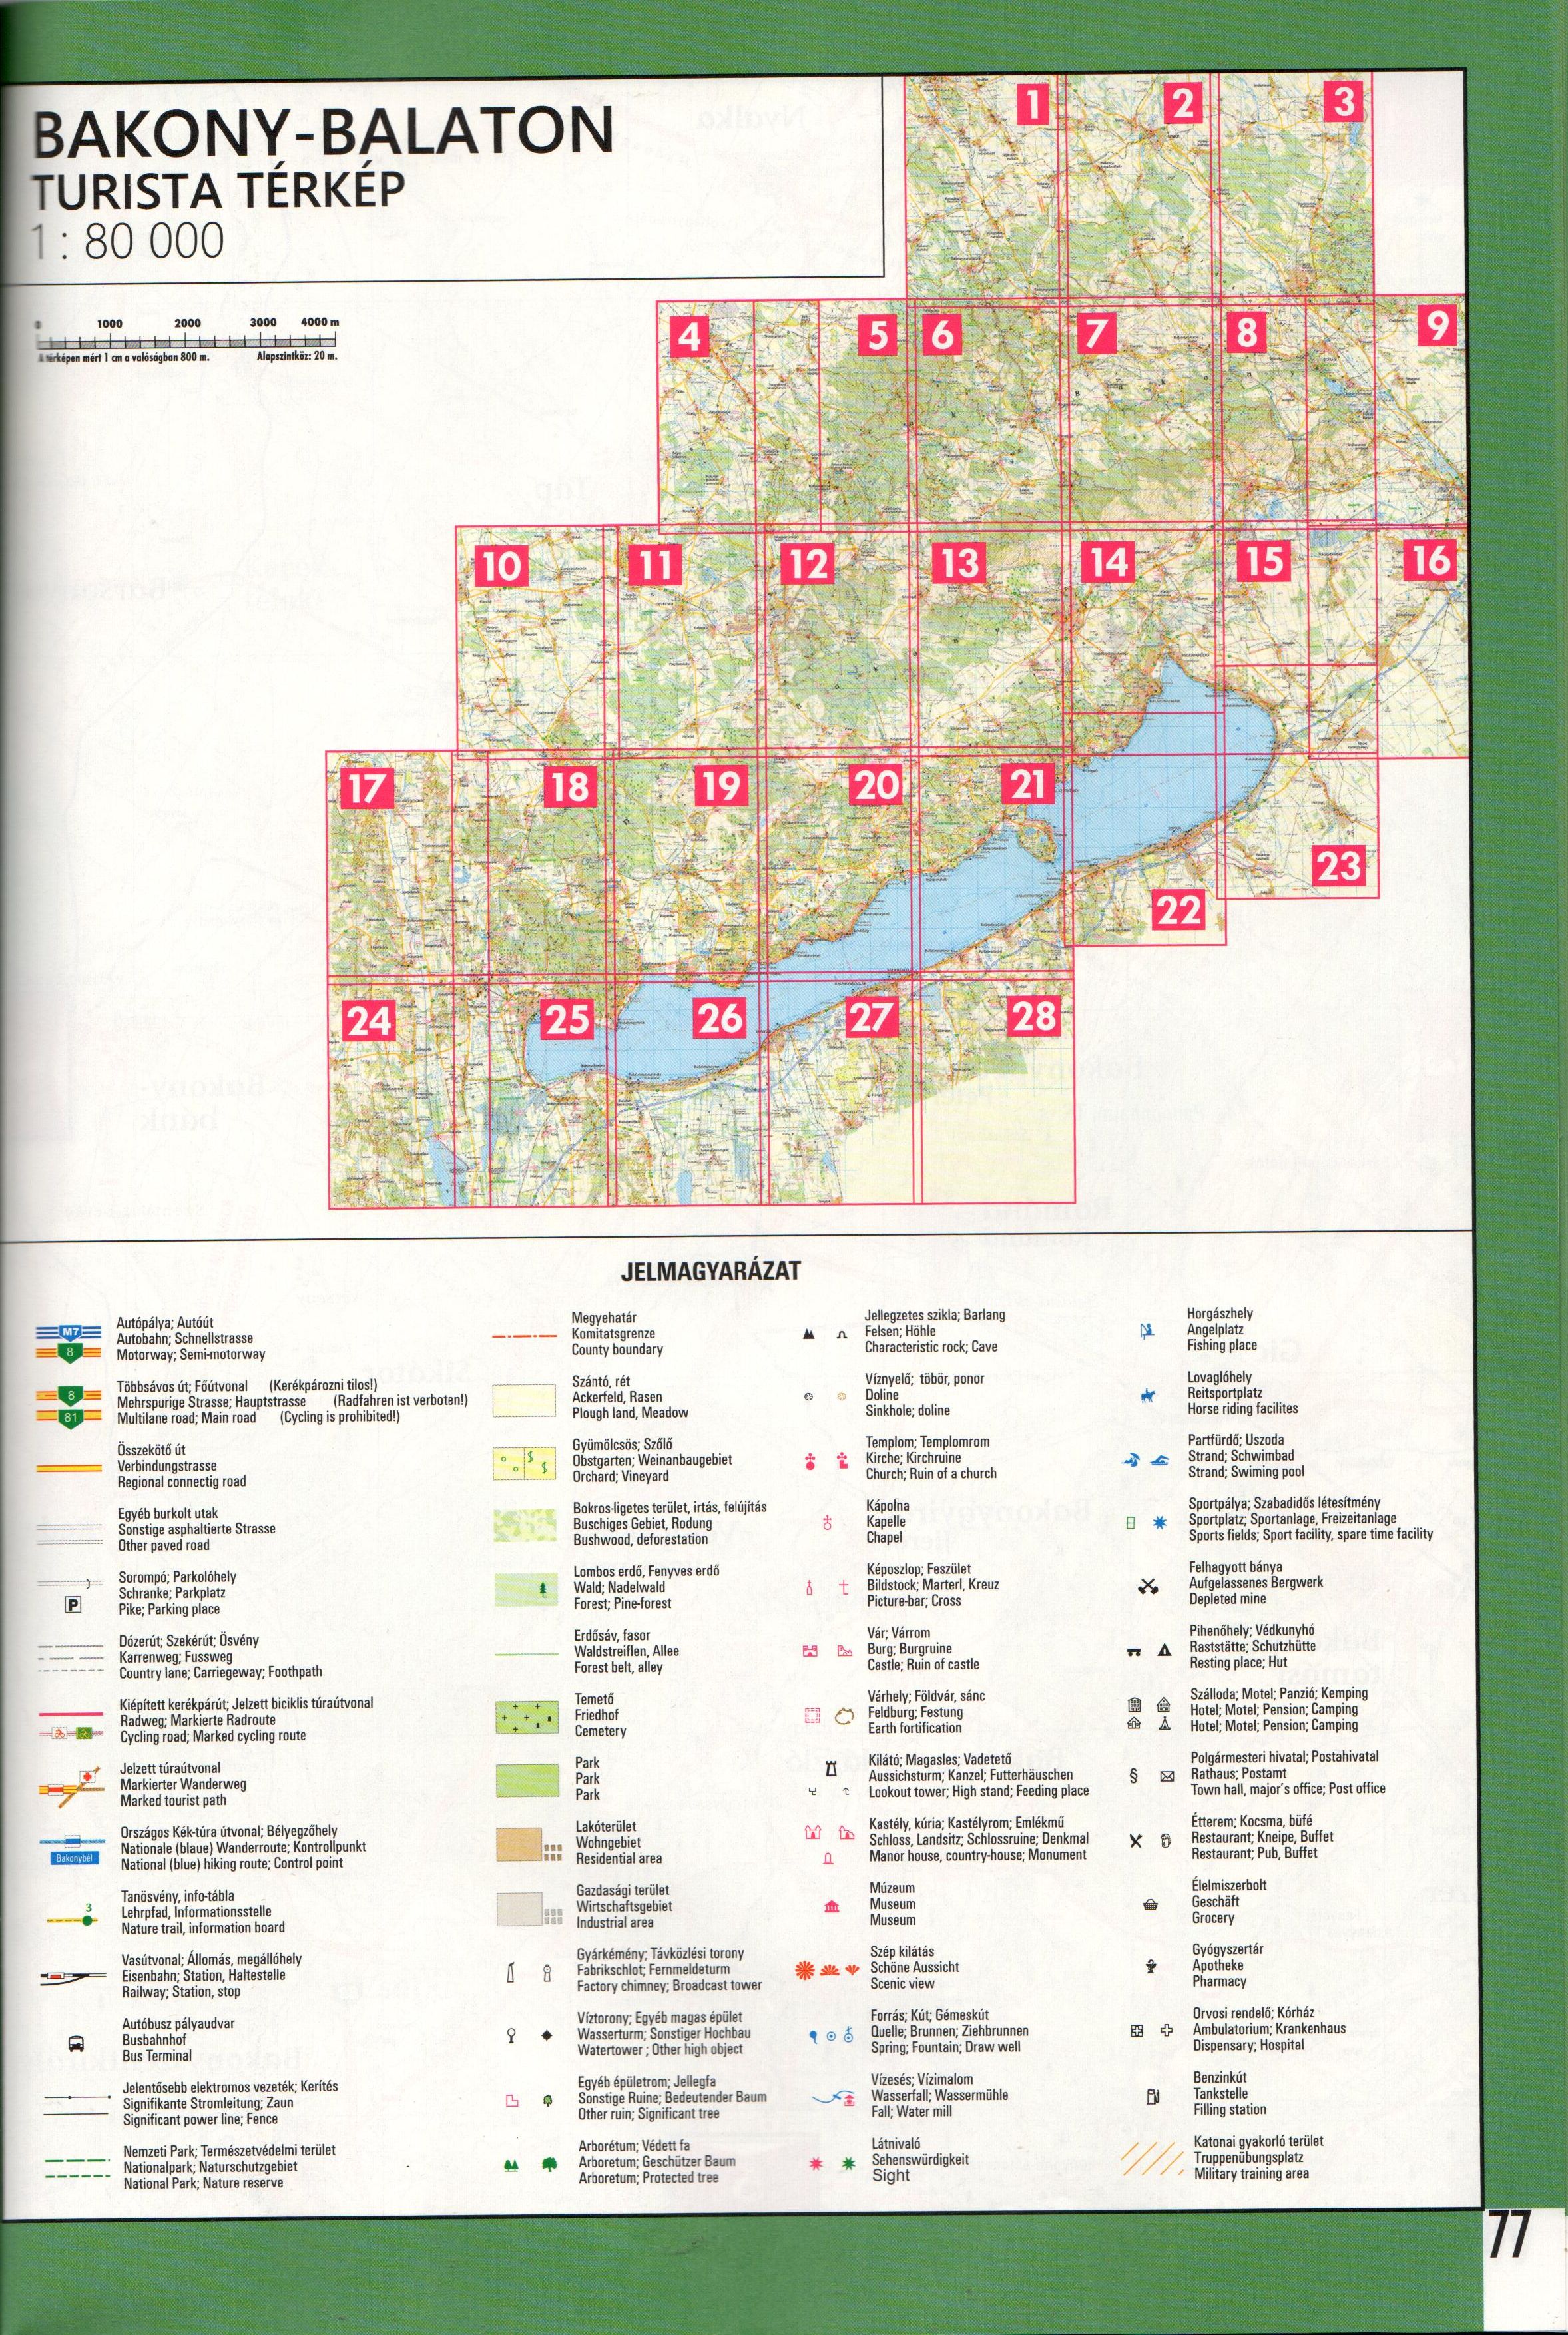 Bakony-Balaton atlas sheet reference map